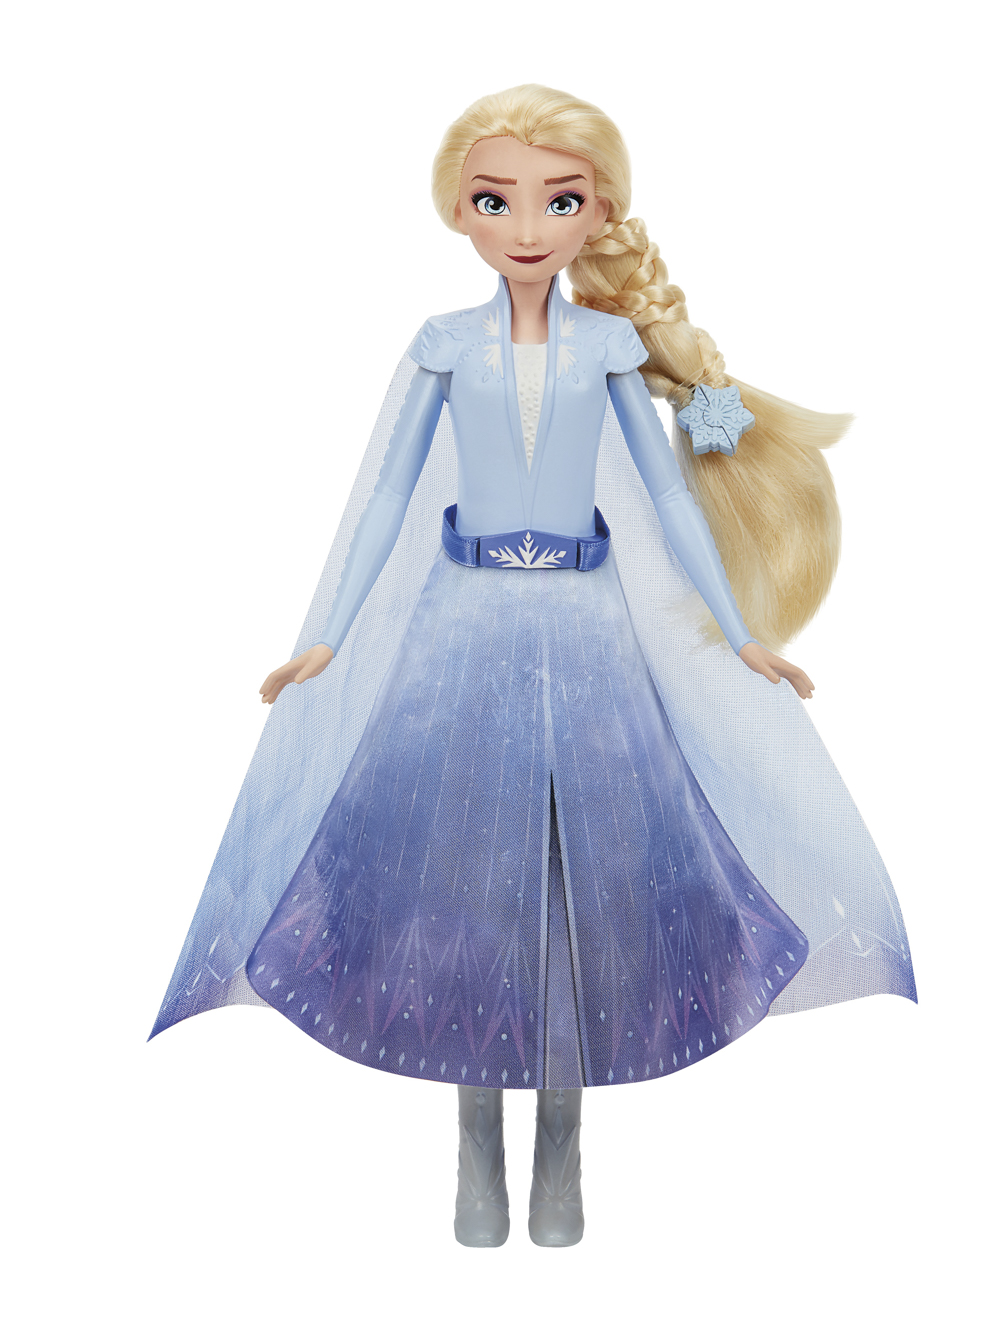 Disney Frozen 2 new Hasbro dolls for fall 2020 - YouLoveIt.com